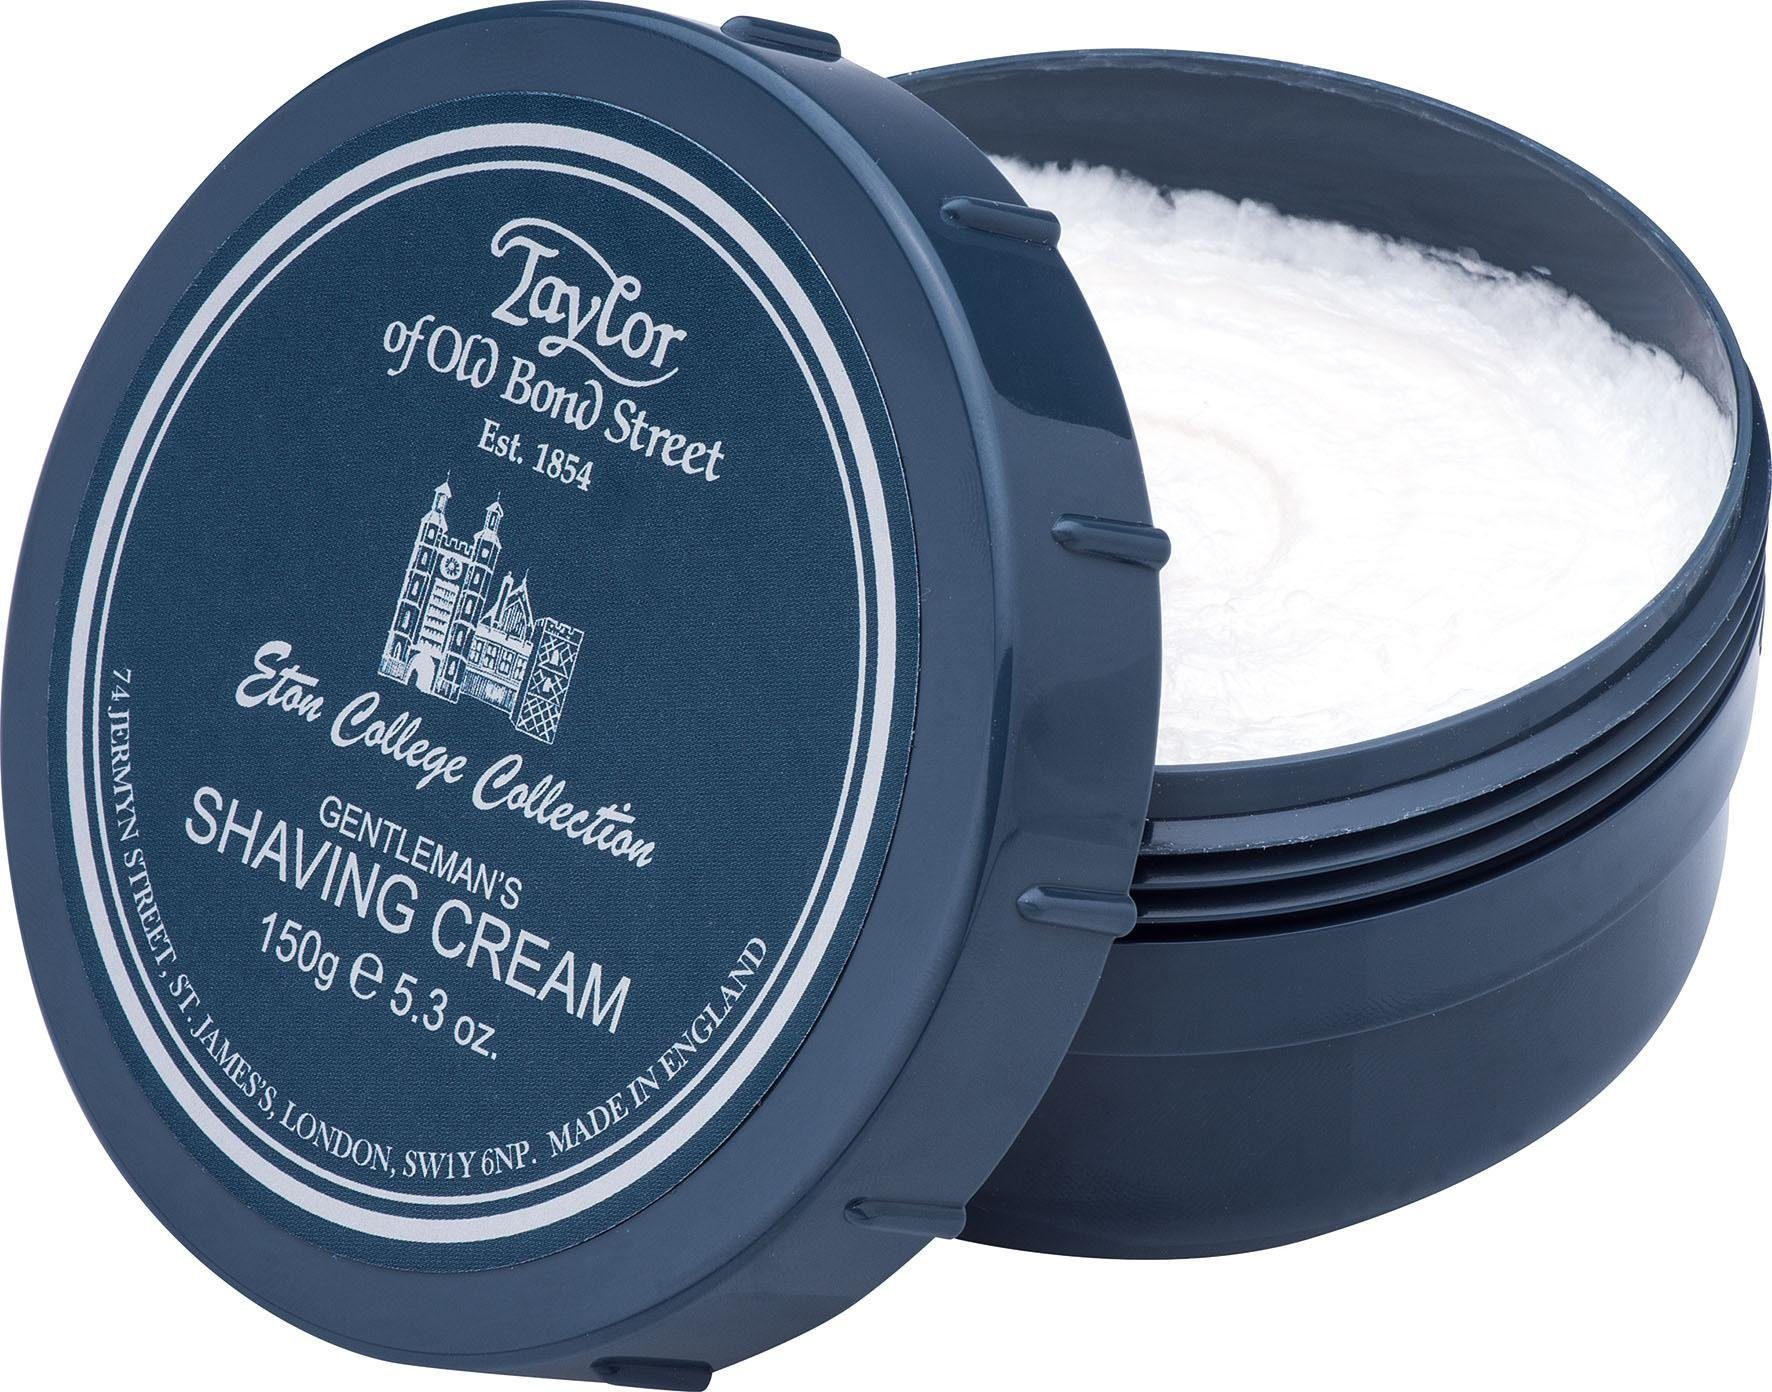 Cream Bond of Shaving Taylor Eton Rasiercreme Street College Old